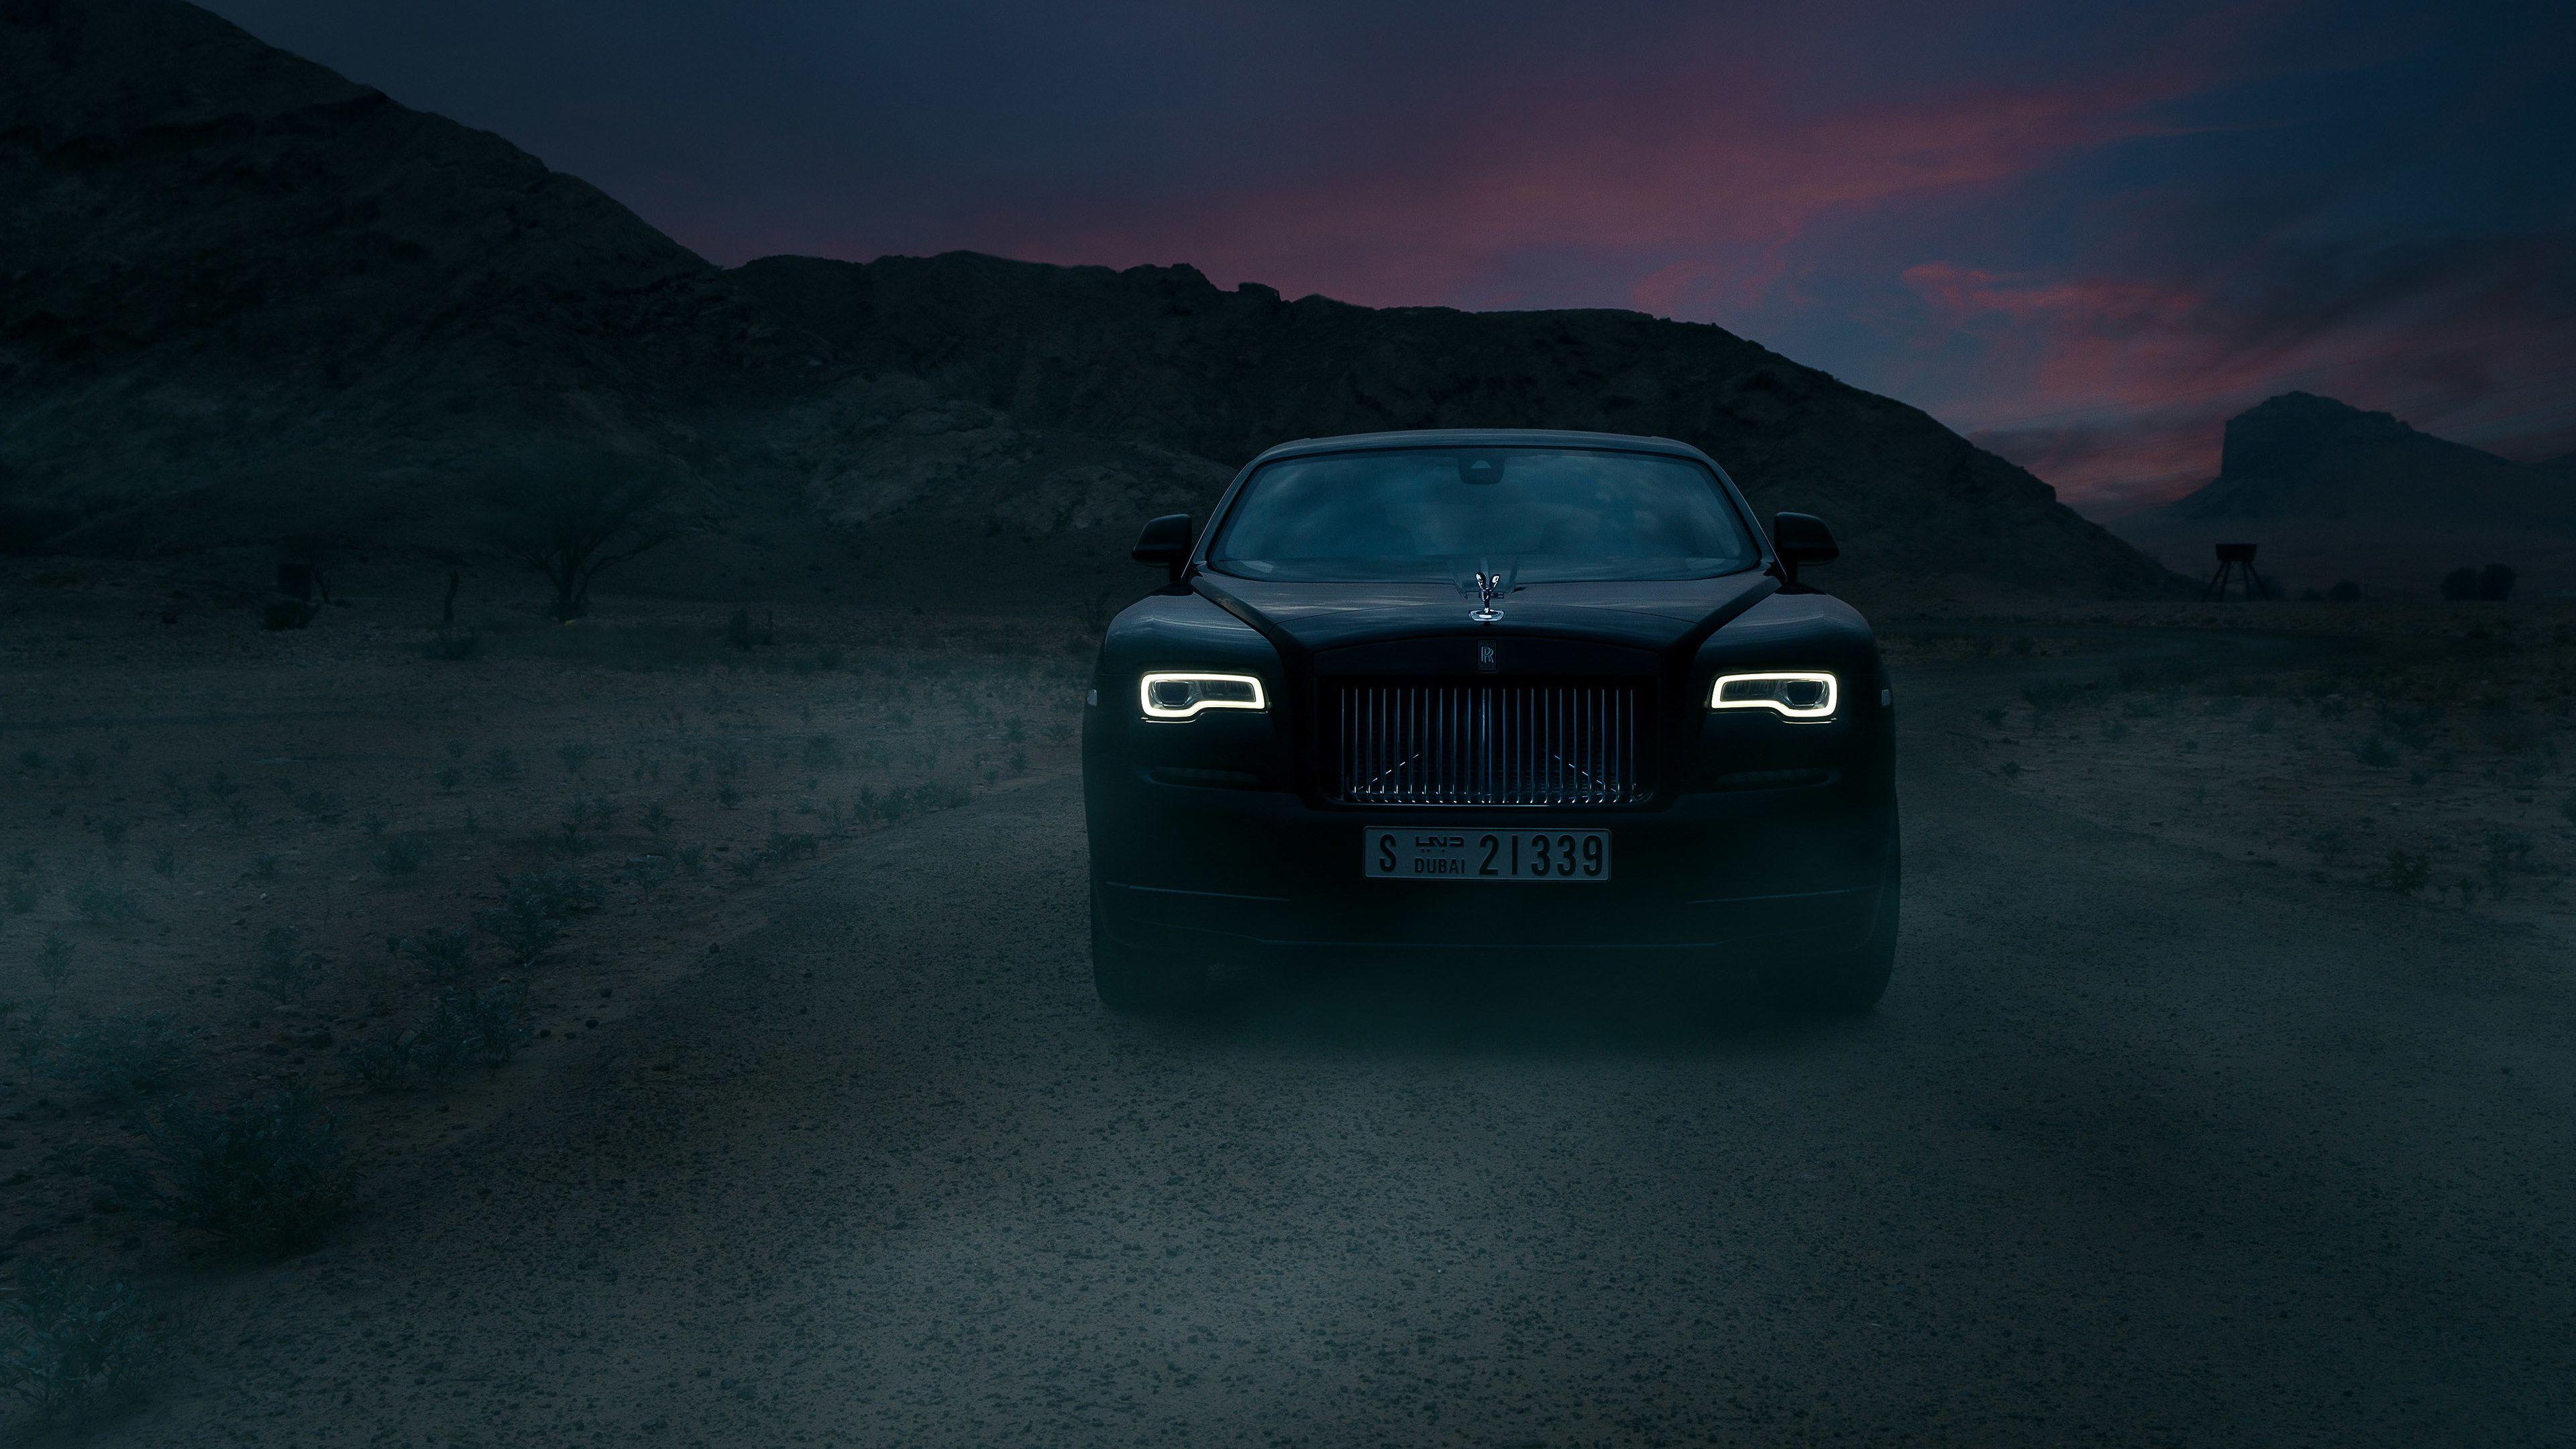 Rolls Royce Wraith Black Badge Rolls Royce Wraith Wallpaper, Rolls Royce Wallpaper, Hd Wallpaper, Da. Rolls Royce Wraith, Rolls Royce Wraith Black, Rolls Royce